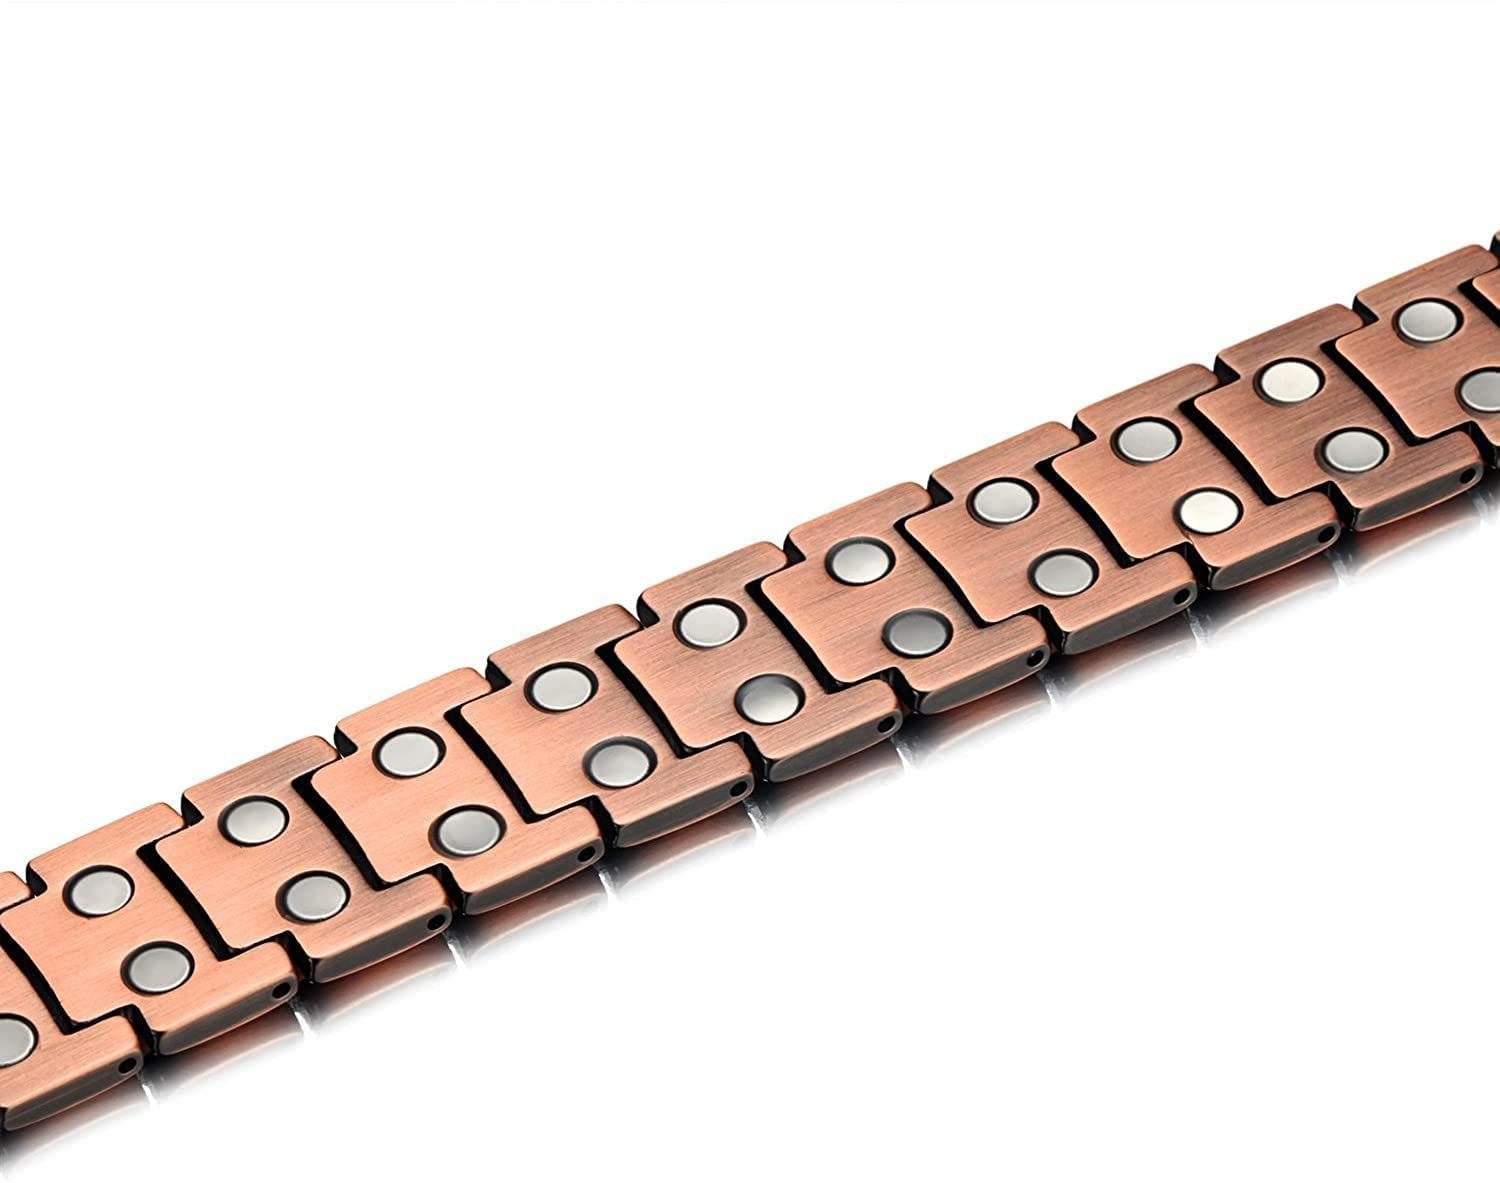 Haiaveng Armband Reines Kupfer Magnetarmband Männer,Magnetische Armbänder für